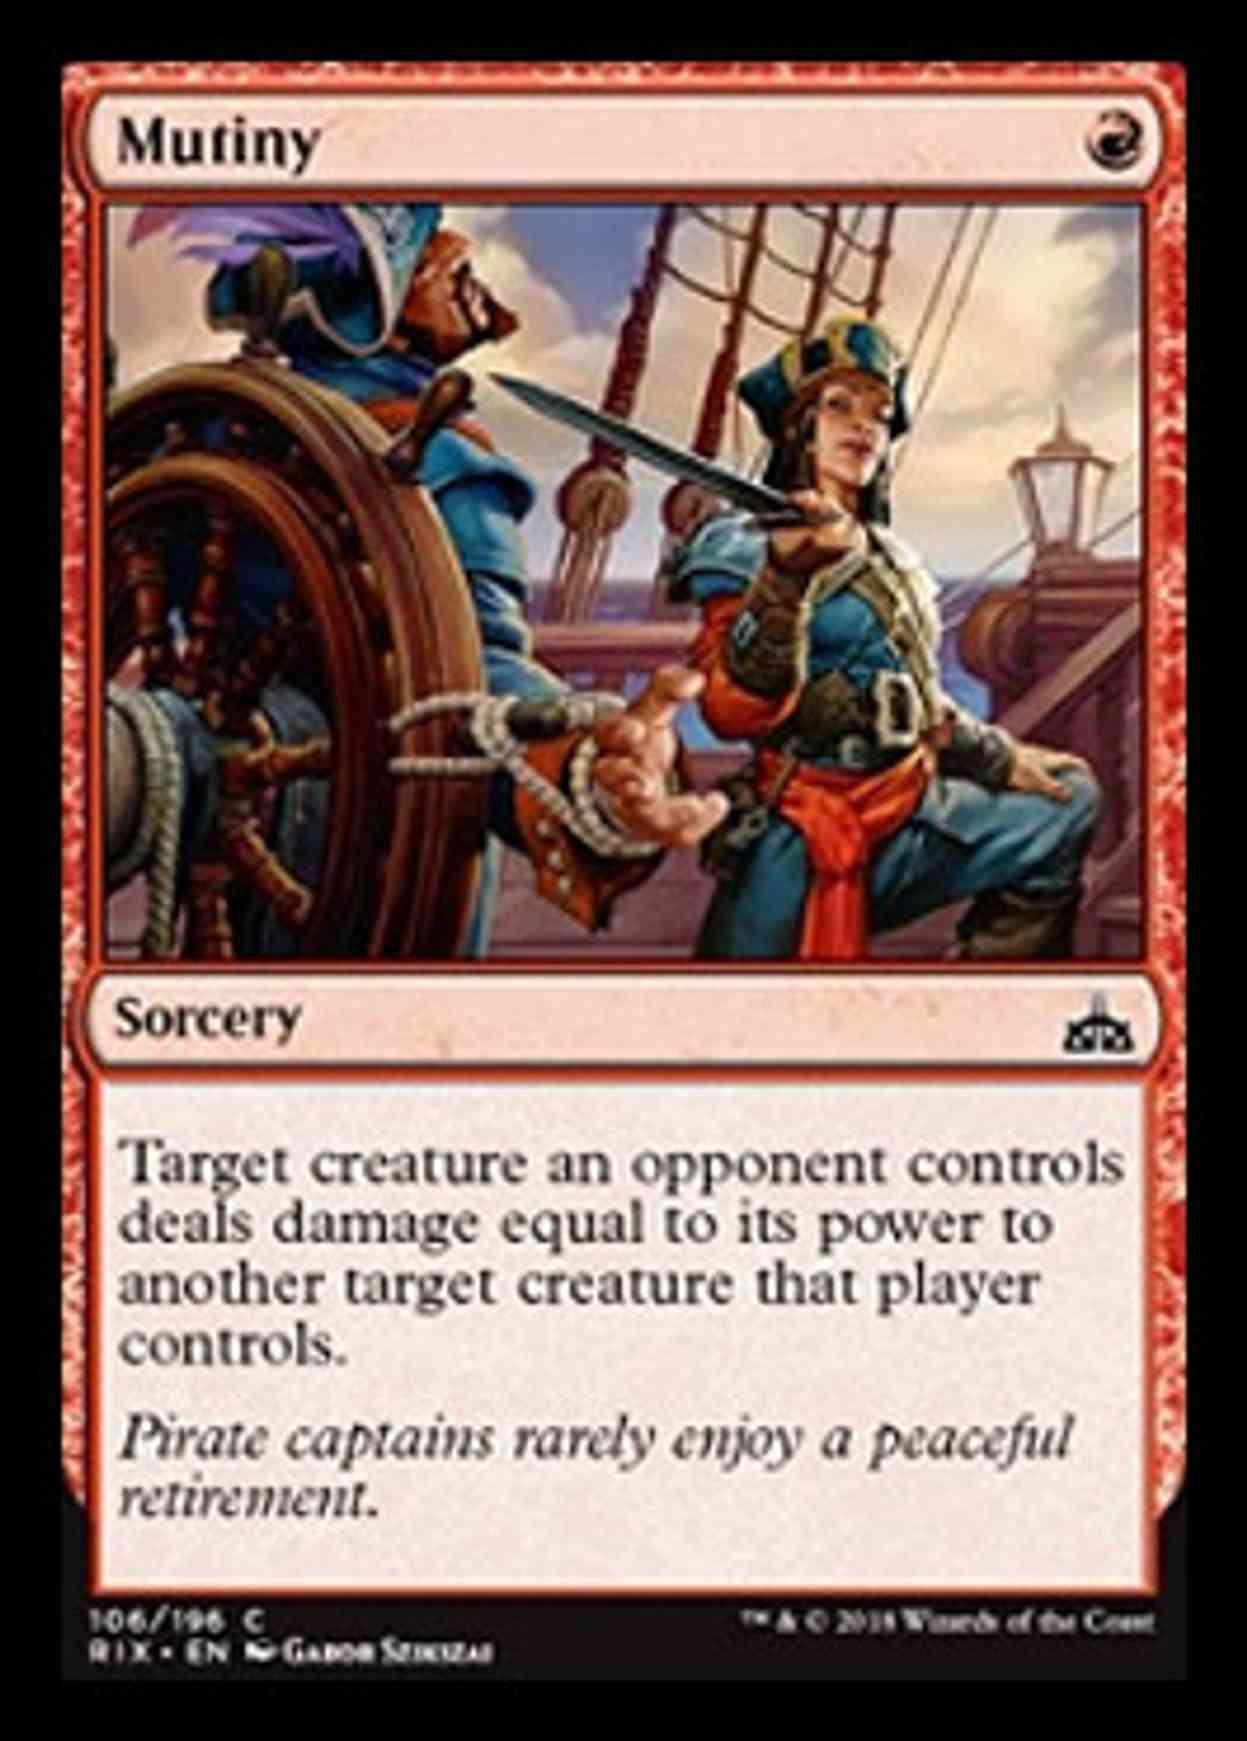 Mutiny magic card front